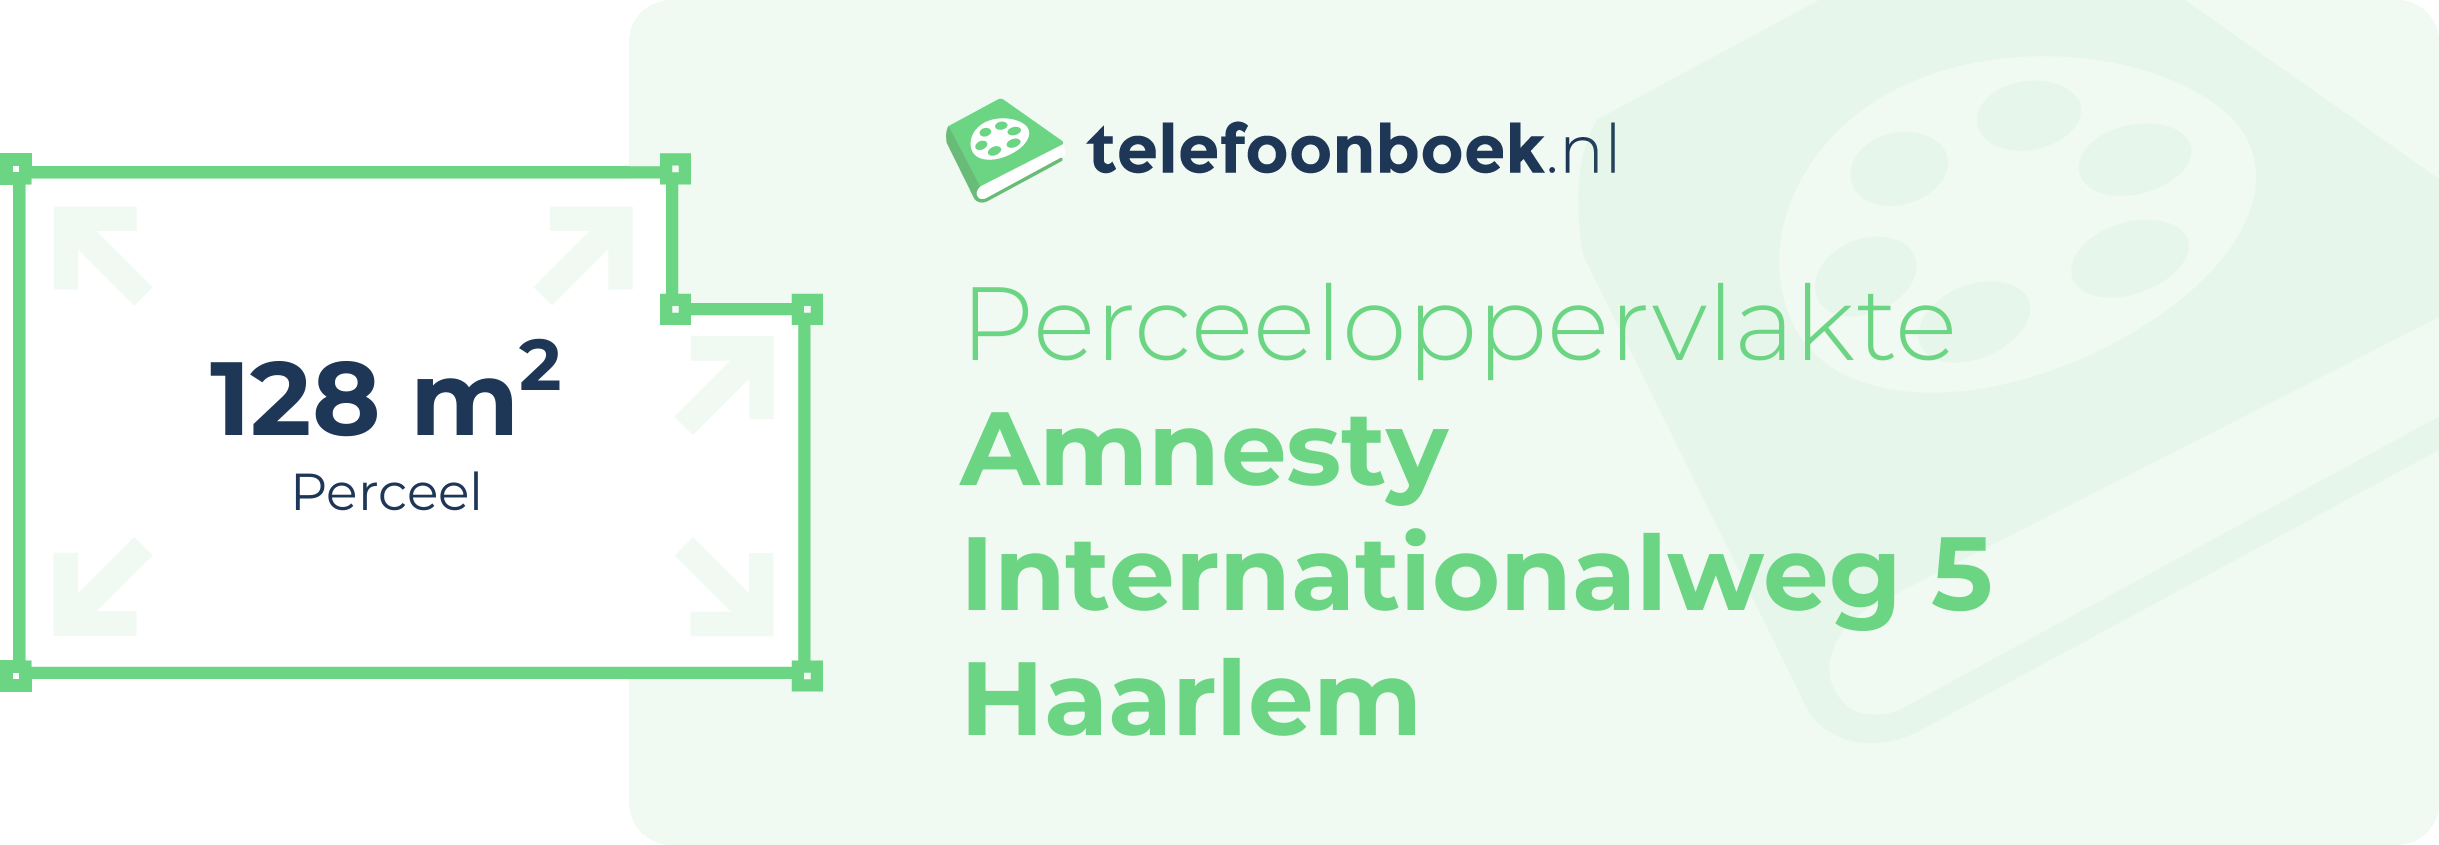 Perceeloppervlakte Amnesty Internationalweg 5 Haarlem